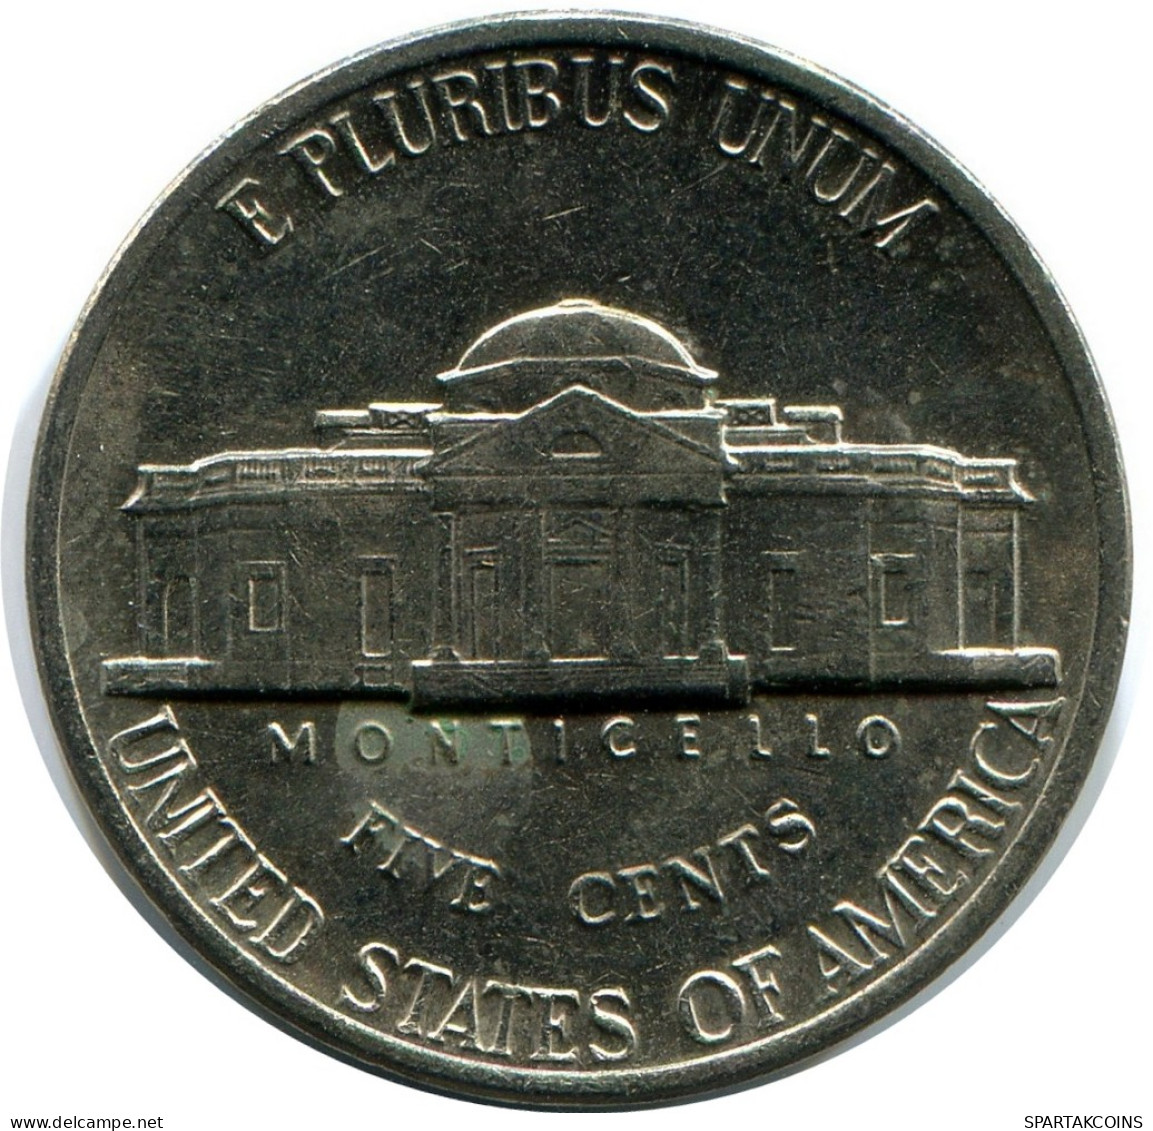 5 CENTS 1987 USA Coin #AZ263.U - 2, 3 & 20 Cent